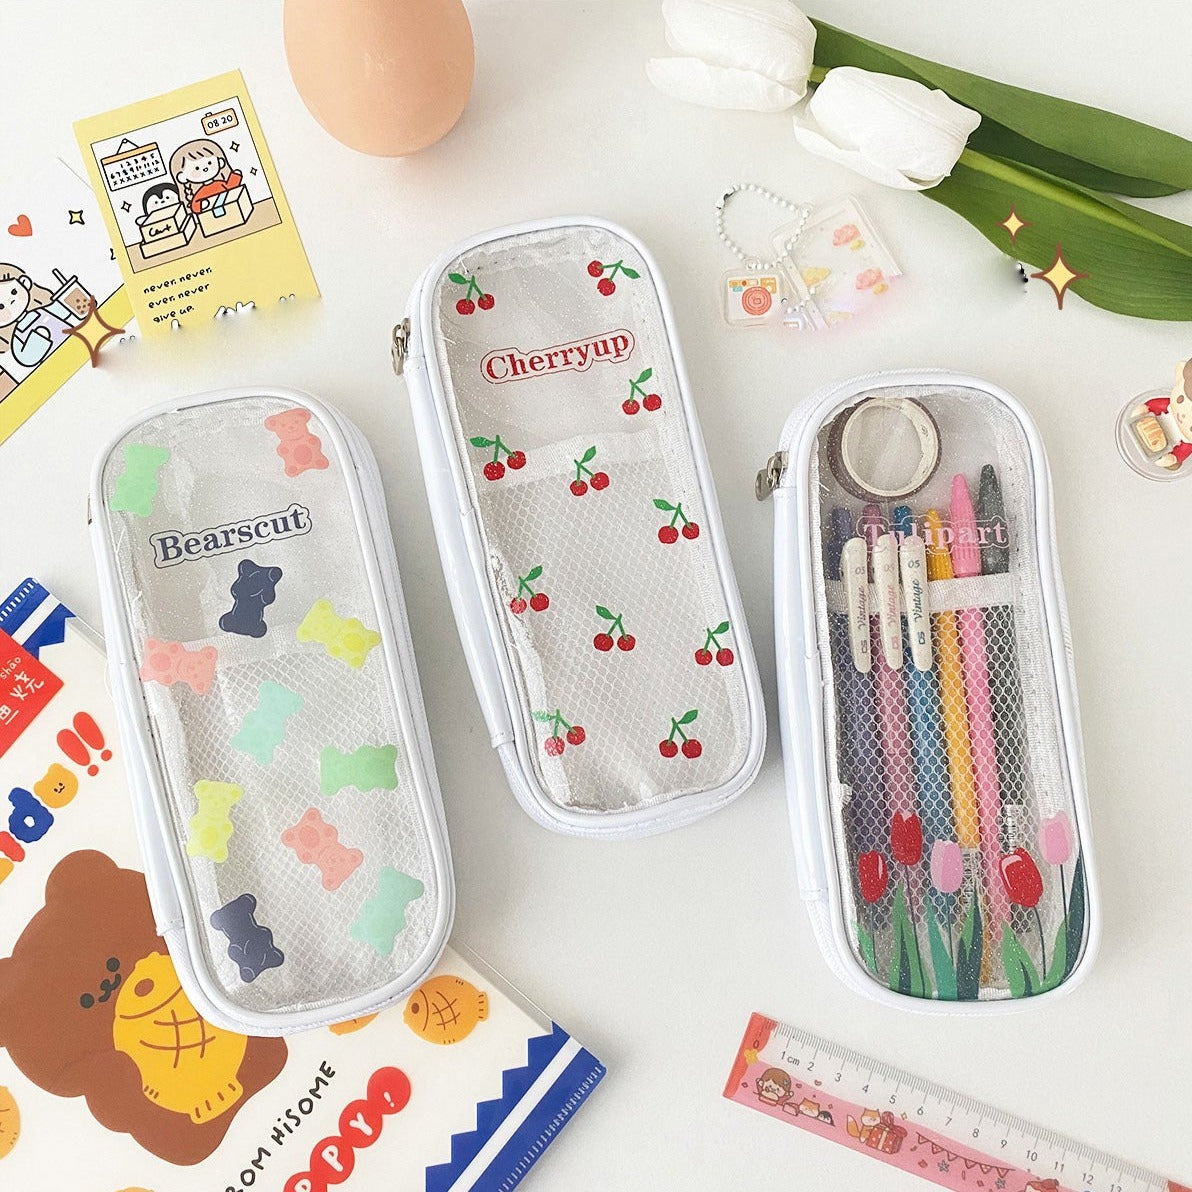 Kawaii Pencil Case Aesthetic Cute Pencil Case for Girls Clear